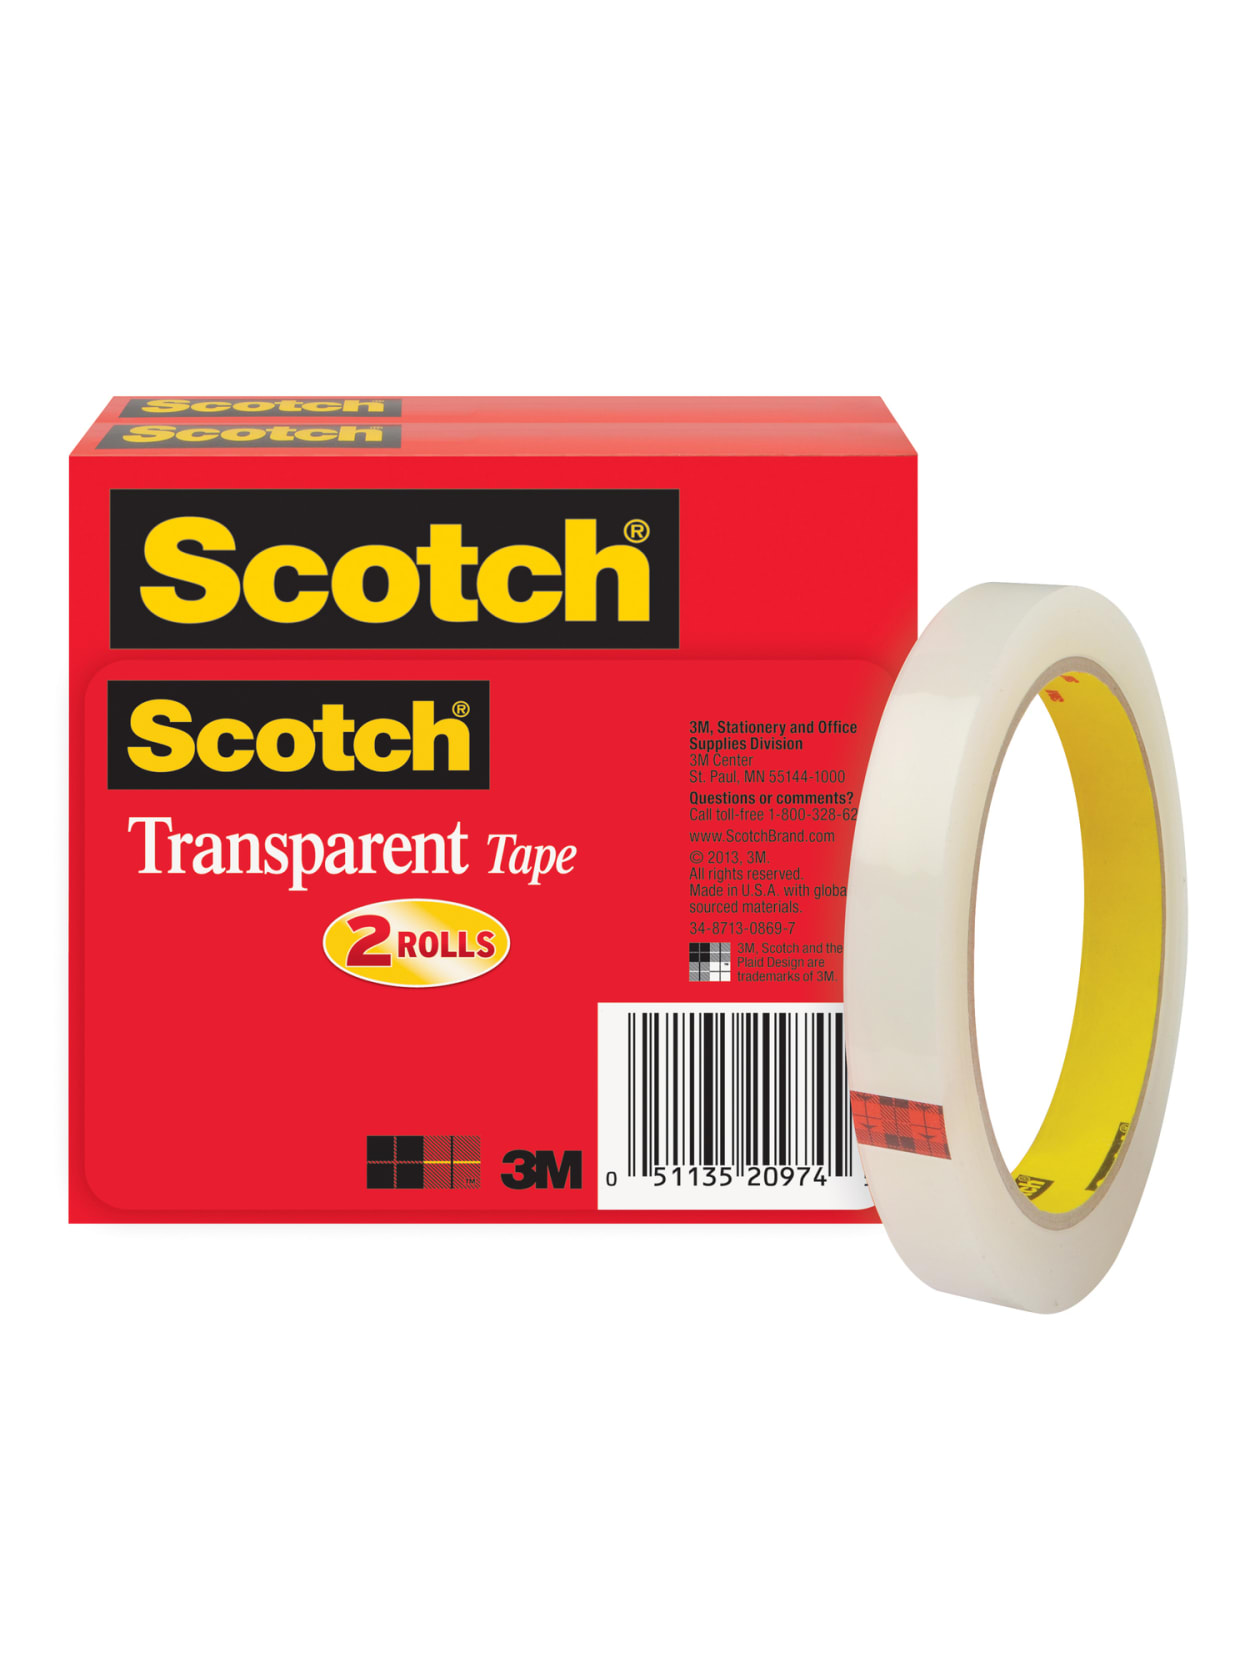 scotch stationery products